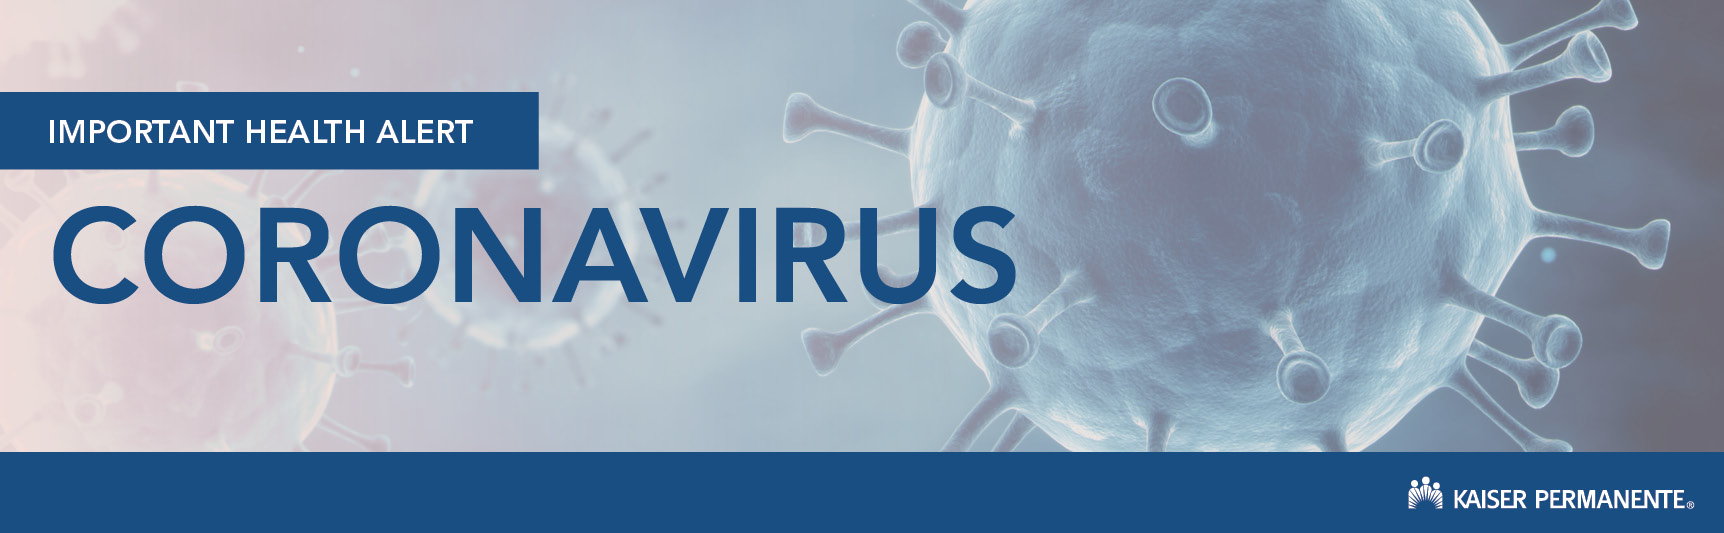 Coronavirus Alert Banner